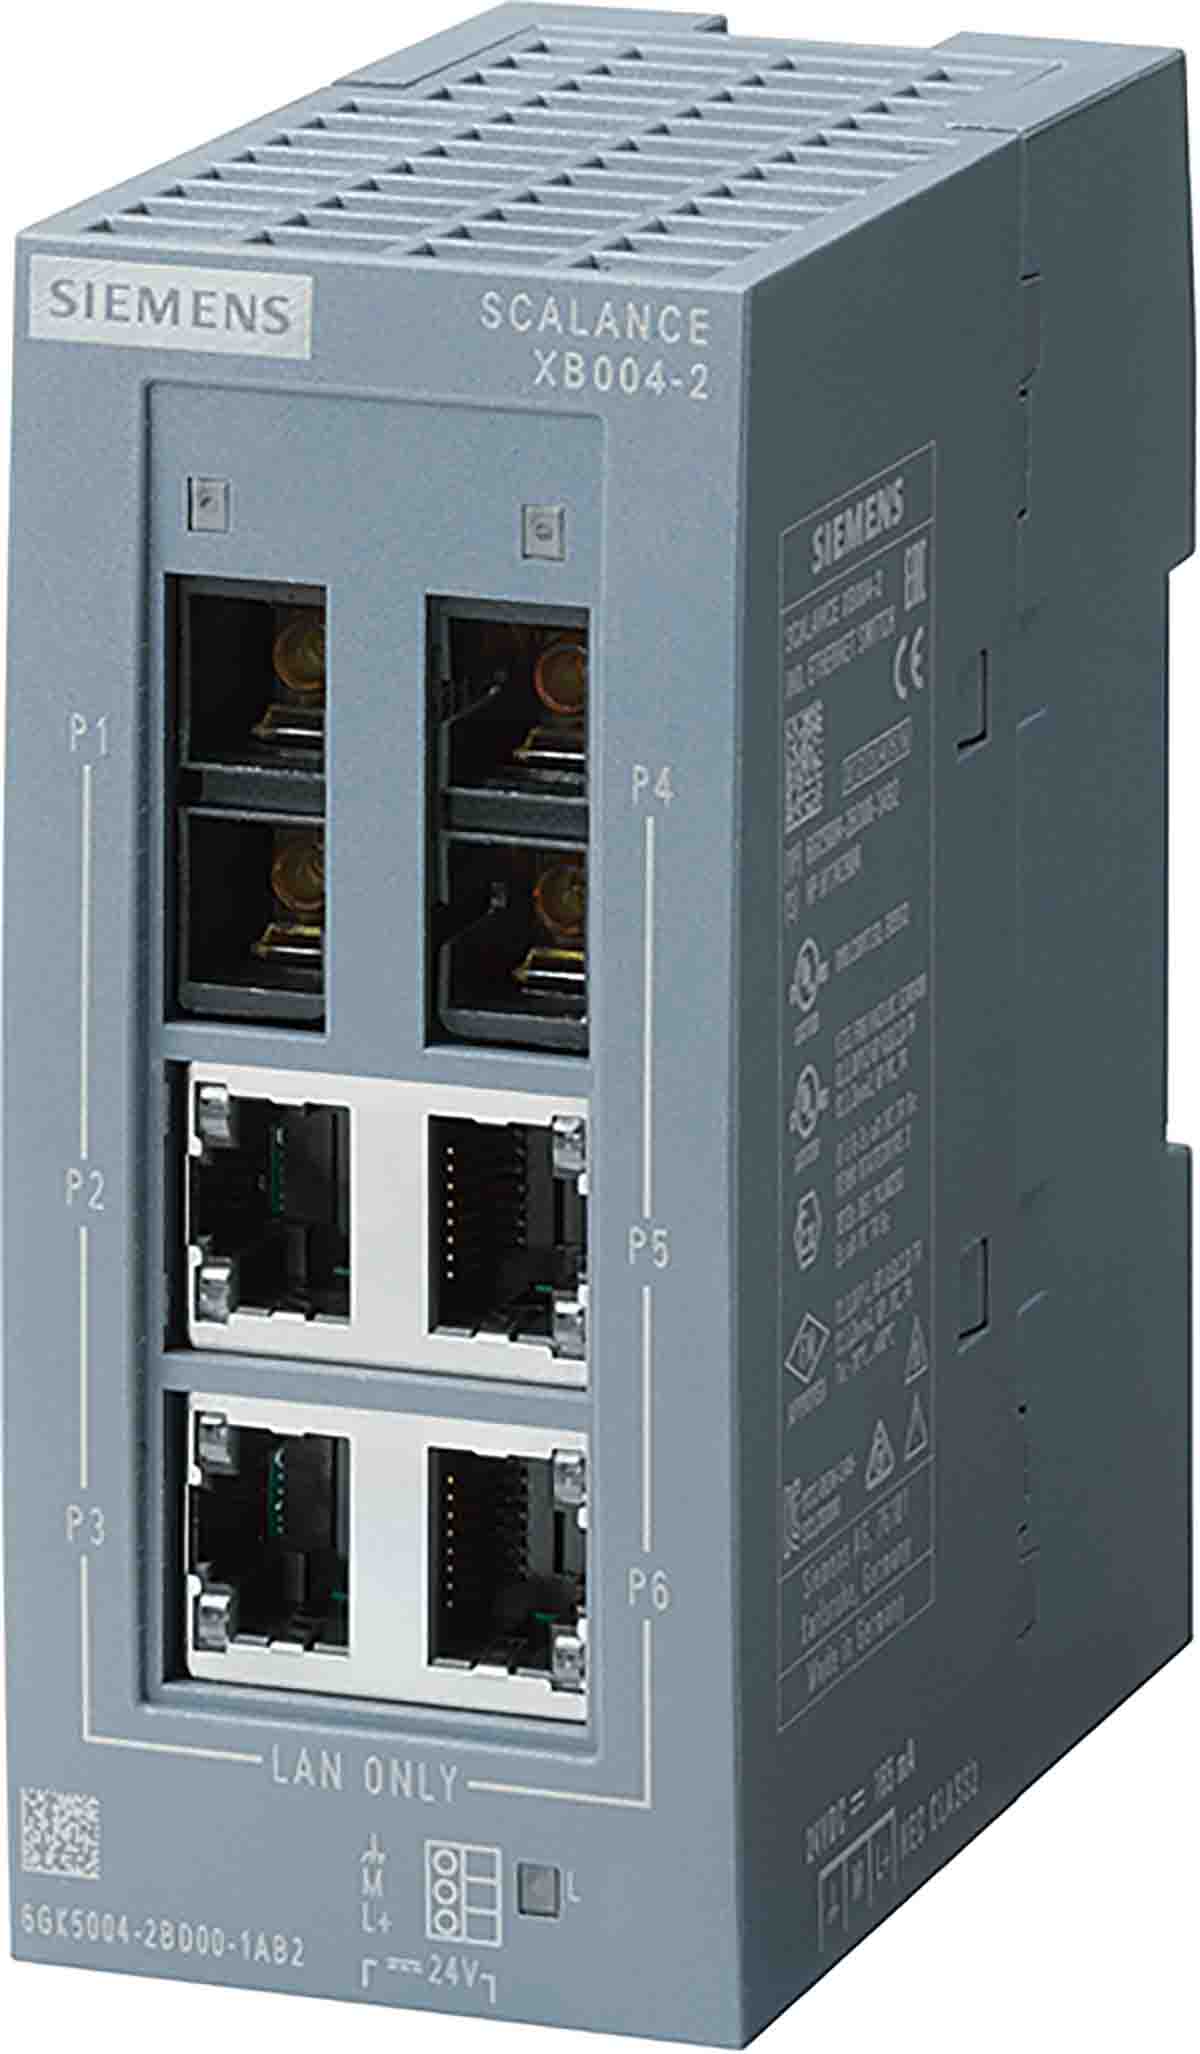 Siemens DIN Rail, Wall Mount Ethernet Switch, 4 RJ45 port, 24V dc, 10 Mbit/s, 100 Mbit/s Transmission Speed